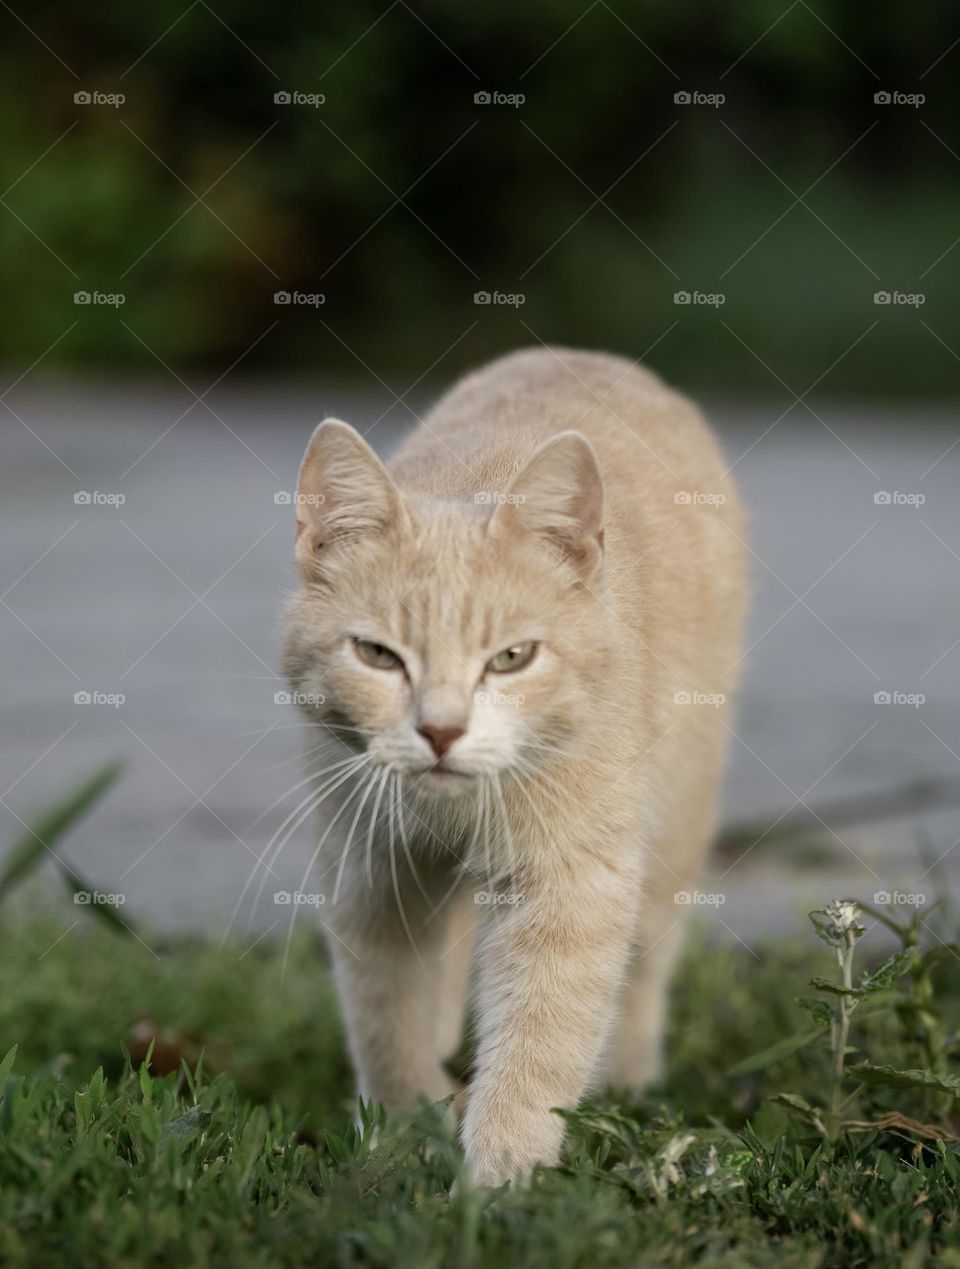 A ginger cat walking on green grass